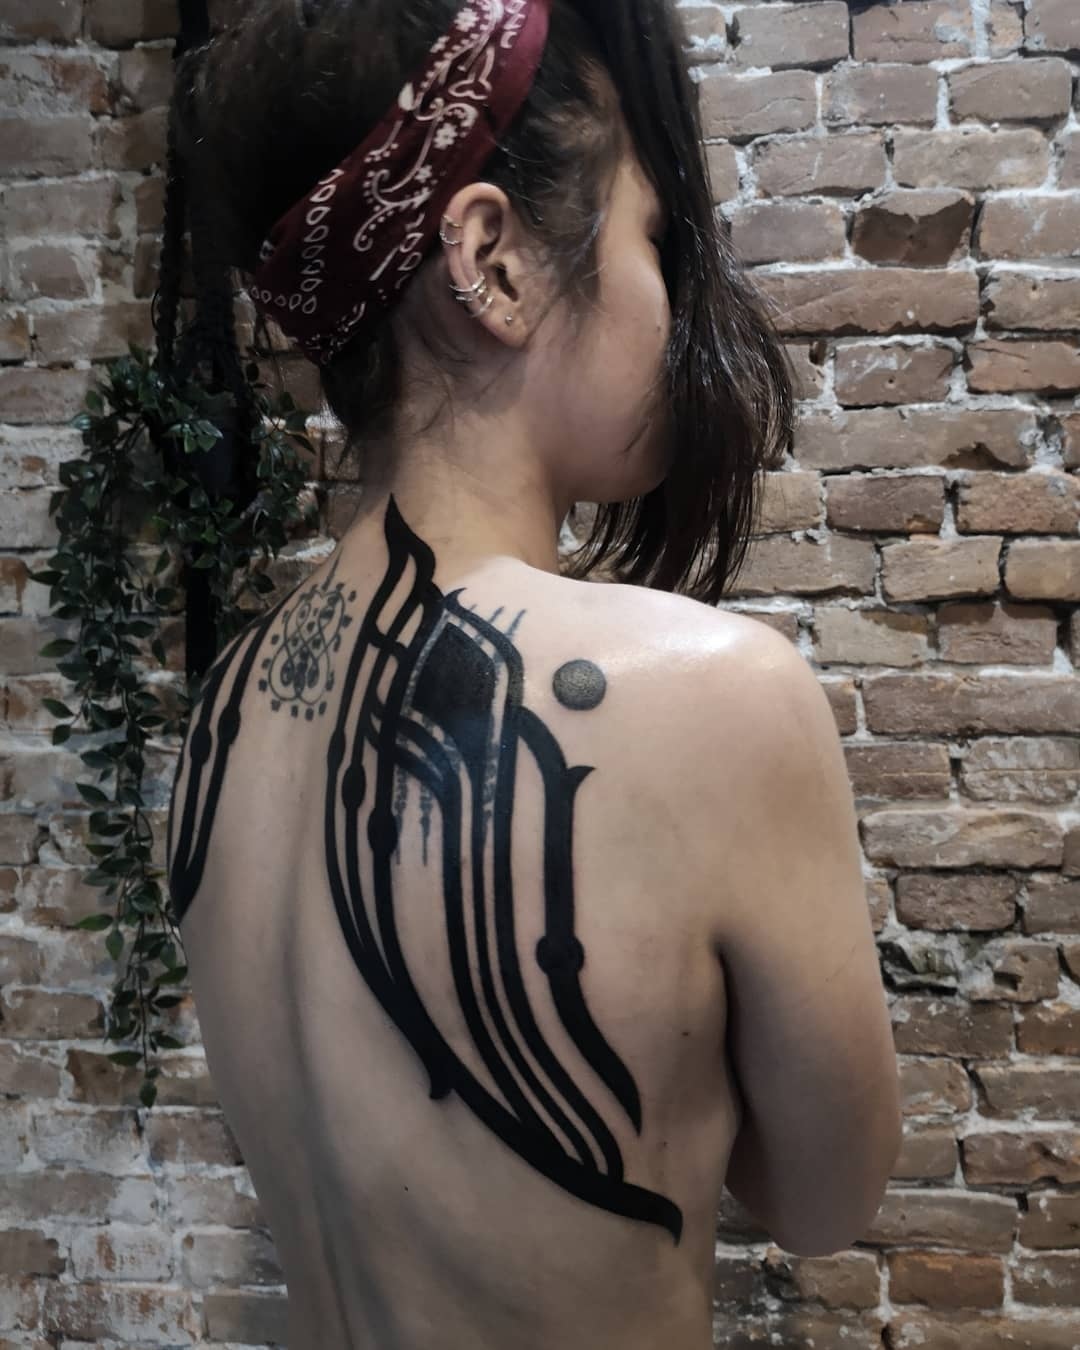 Geometric Wings tattoo on back by Black Ink Power